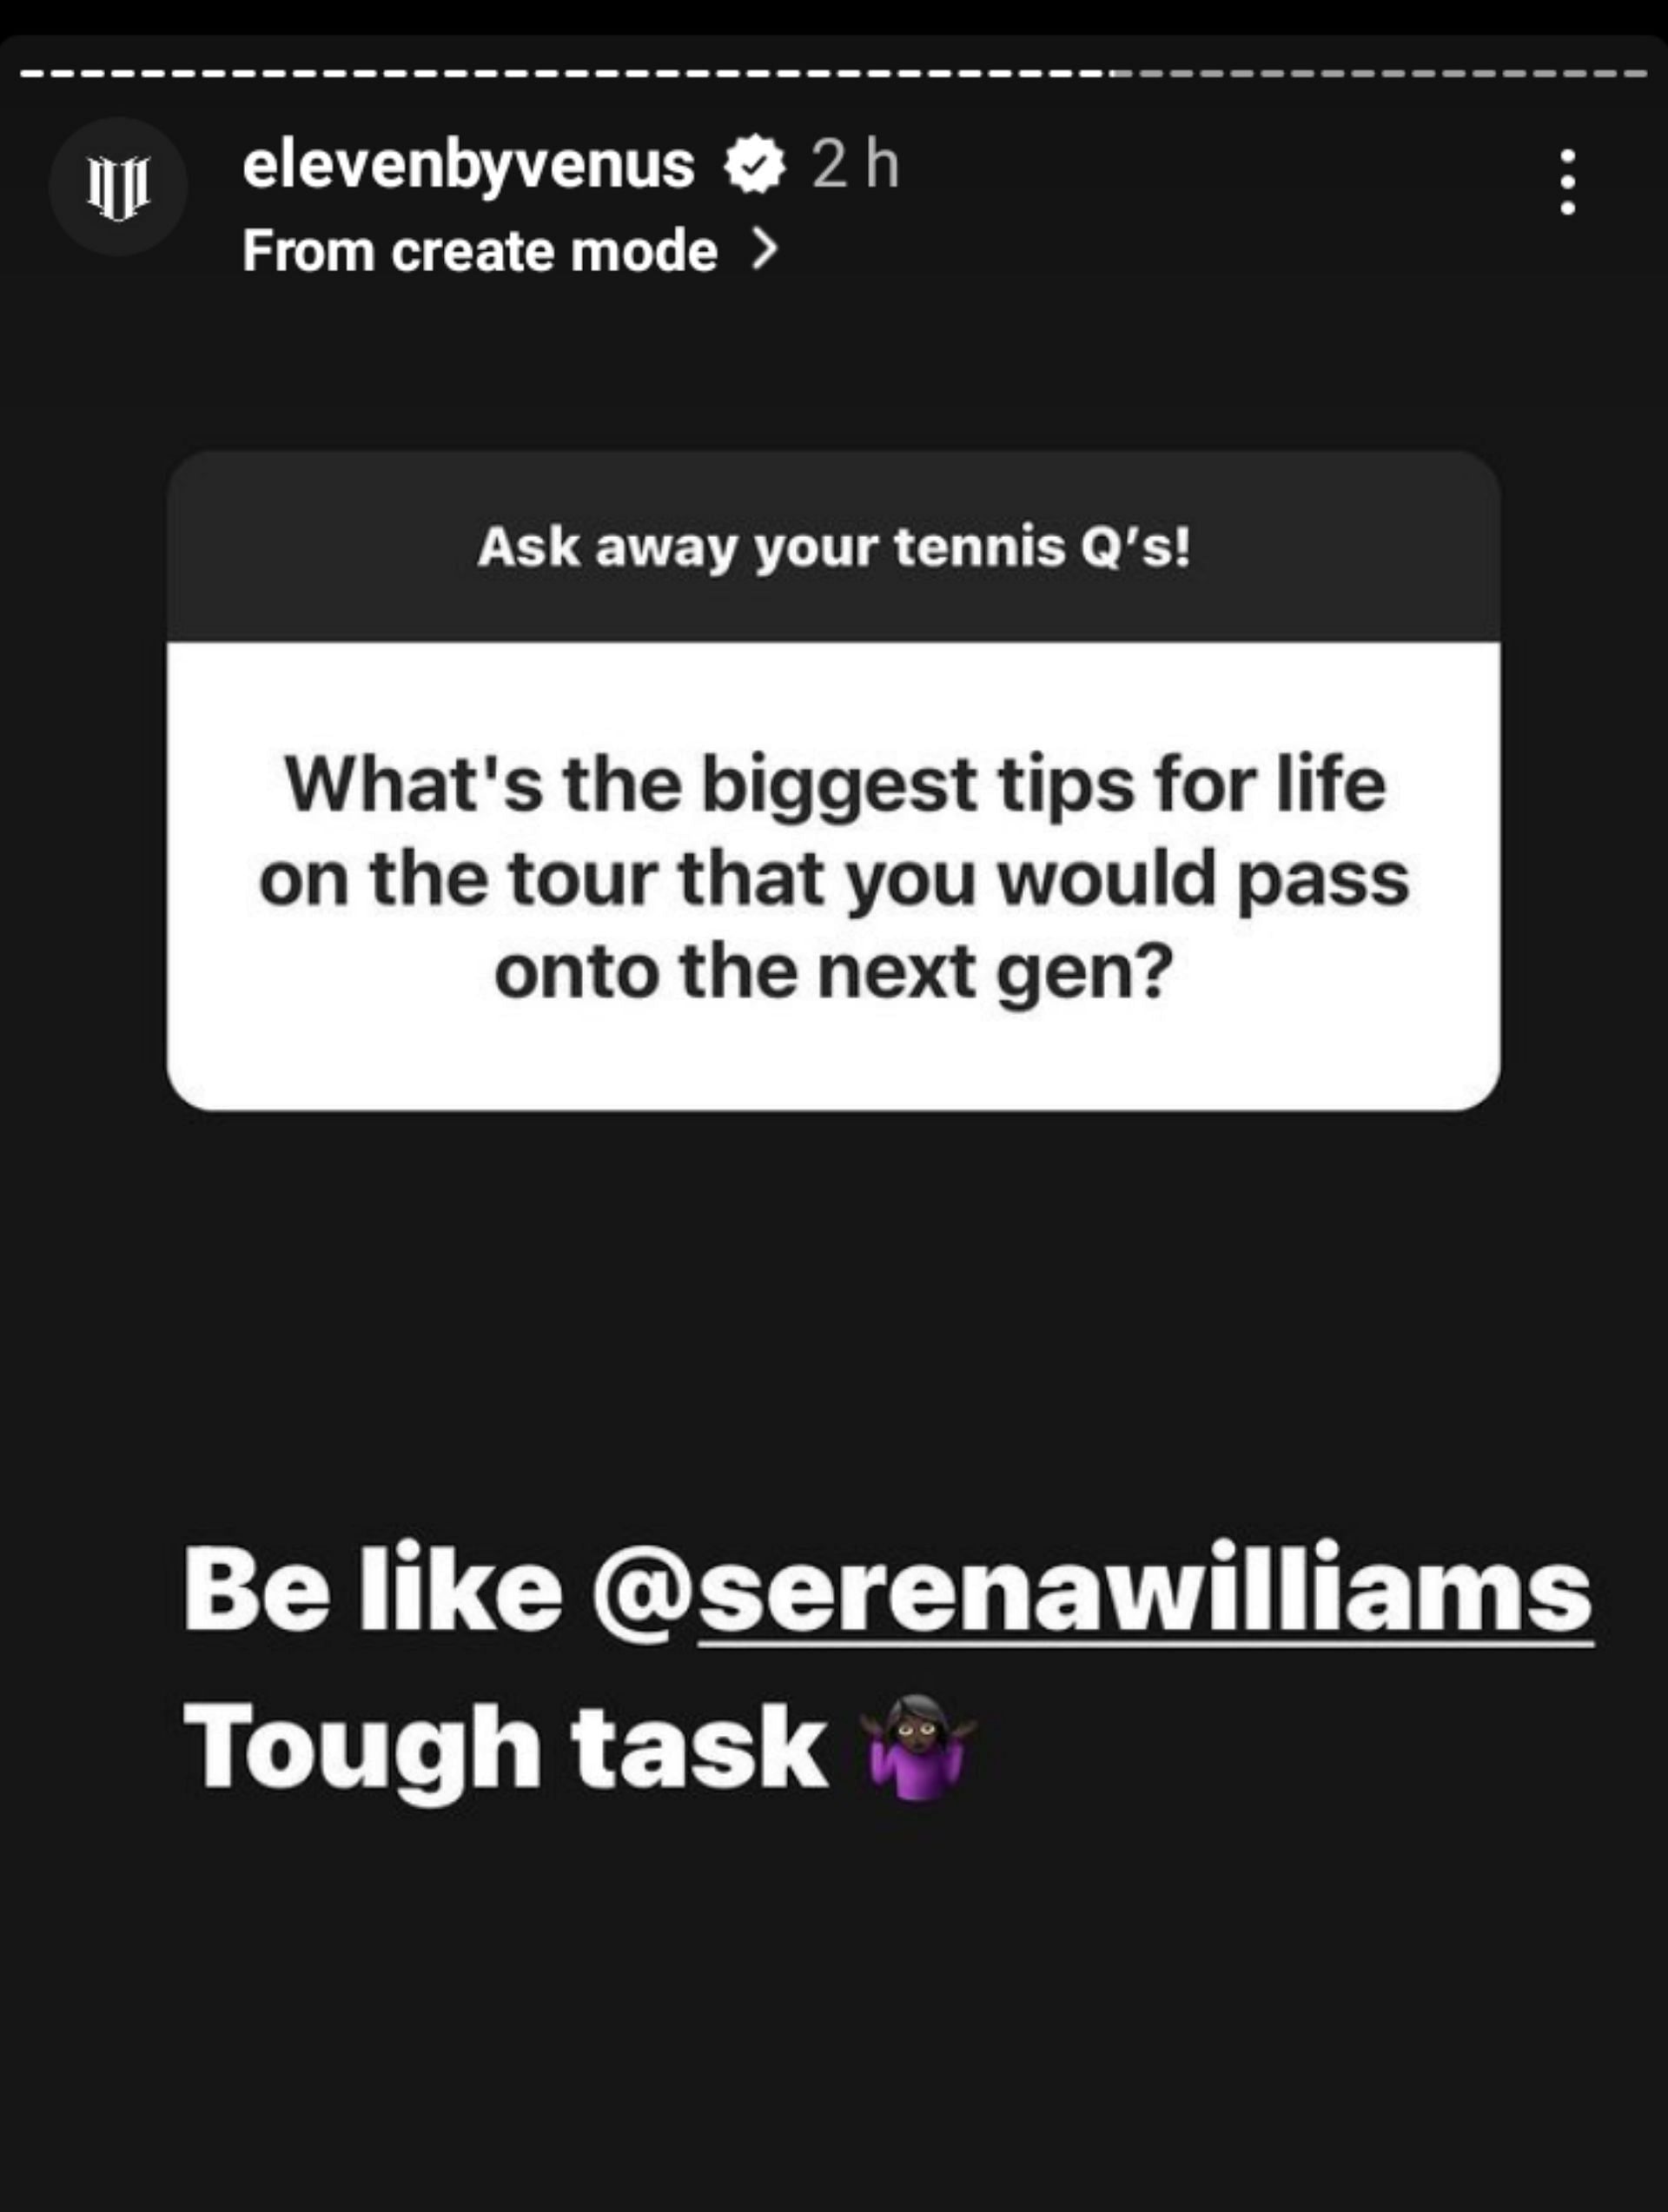 Venus Williams answered in Instagram stories.